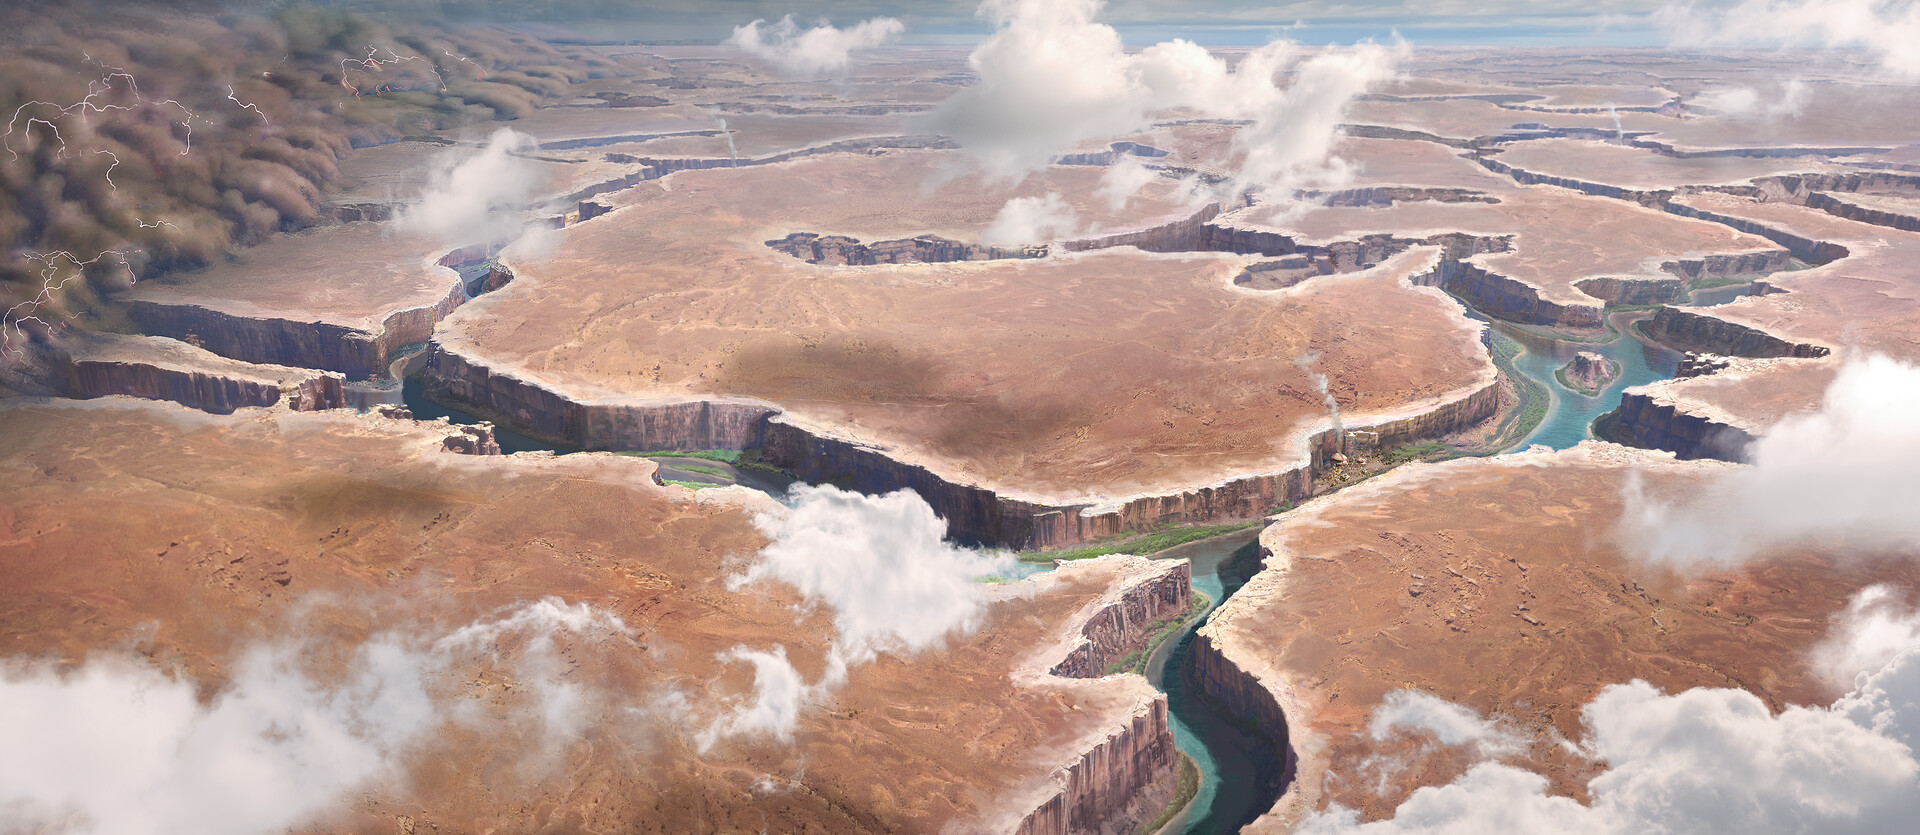 [Donjon] Grand Canyon Jordi-van-hees-overview-rendering-010-small